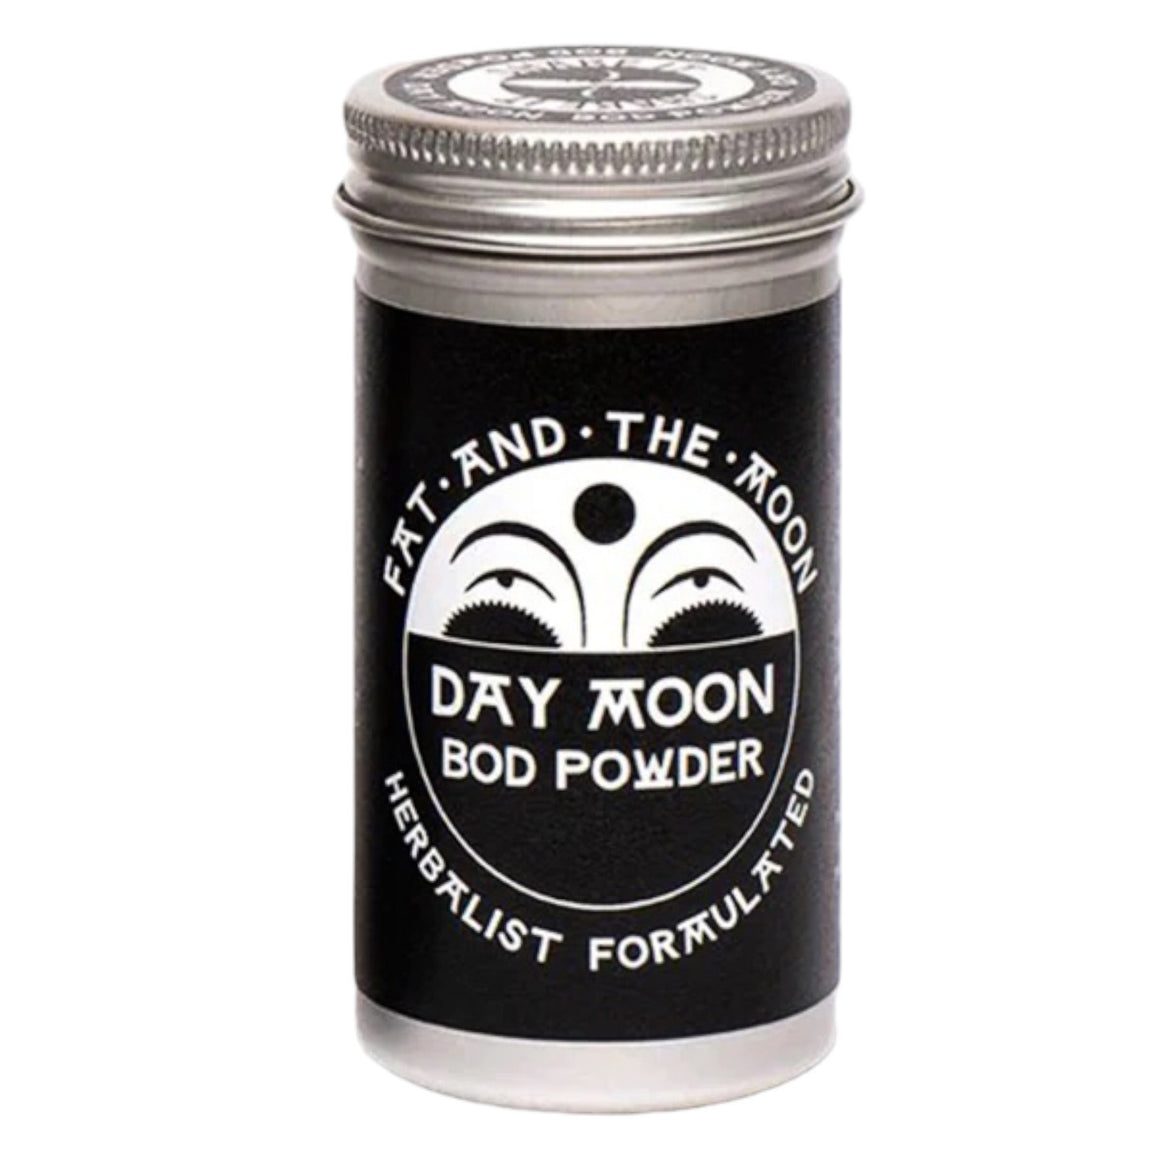 Day Moon Bod Powder - Fat & The Moon 2oz